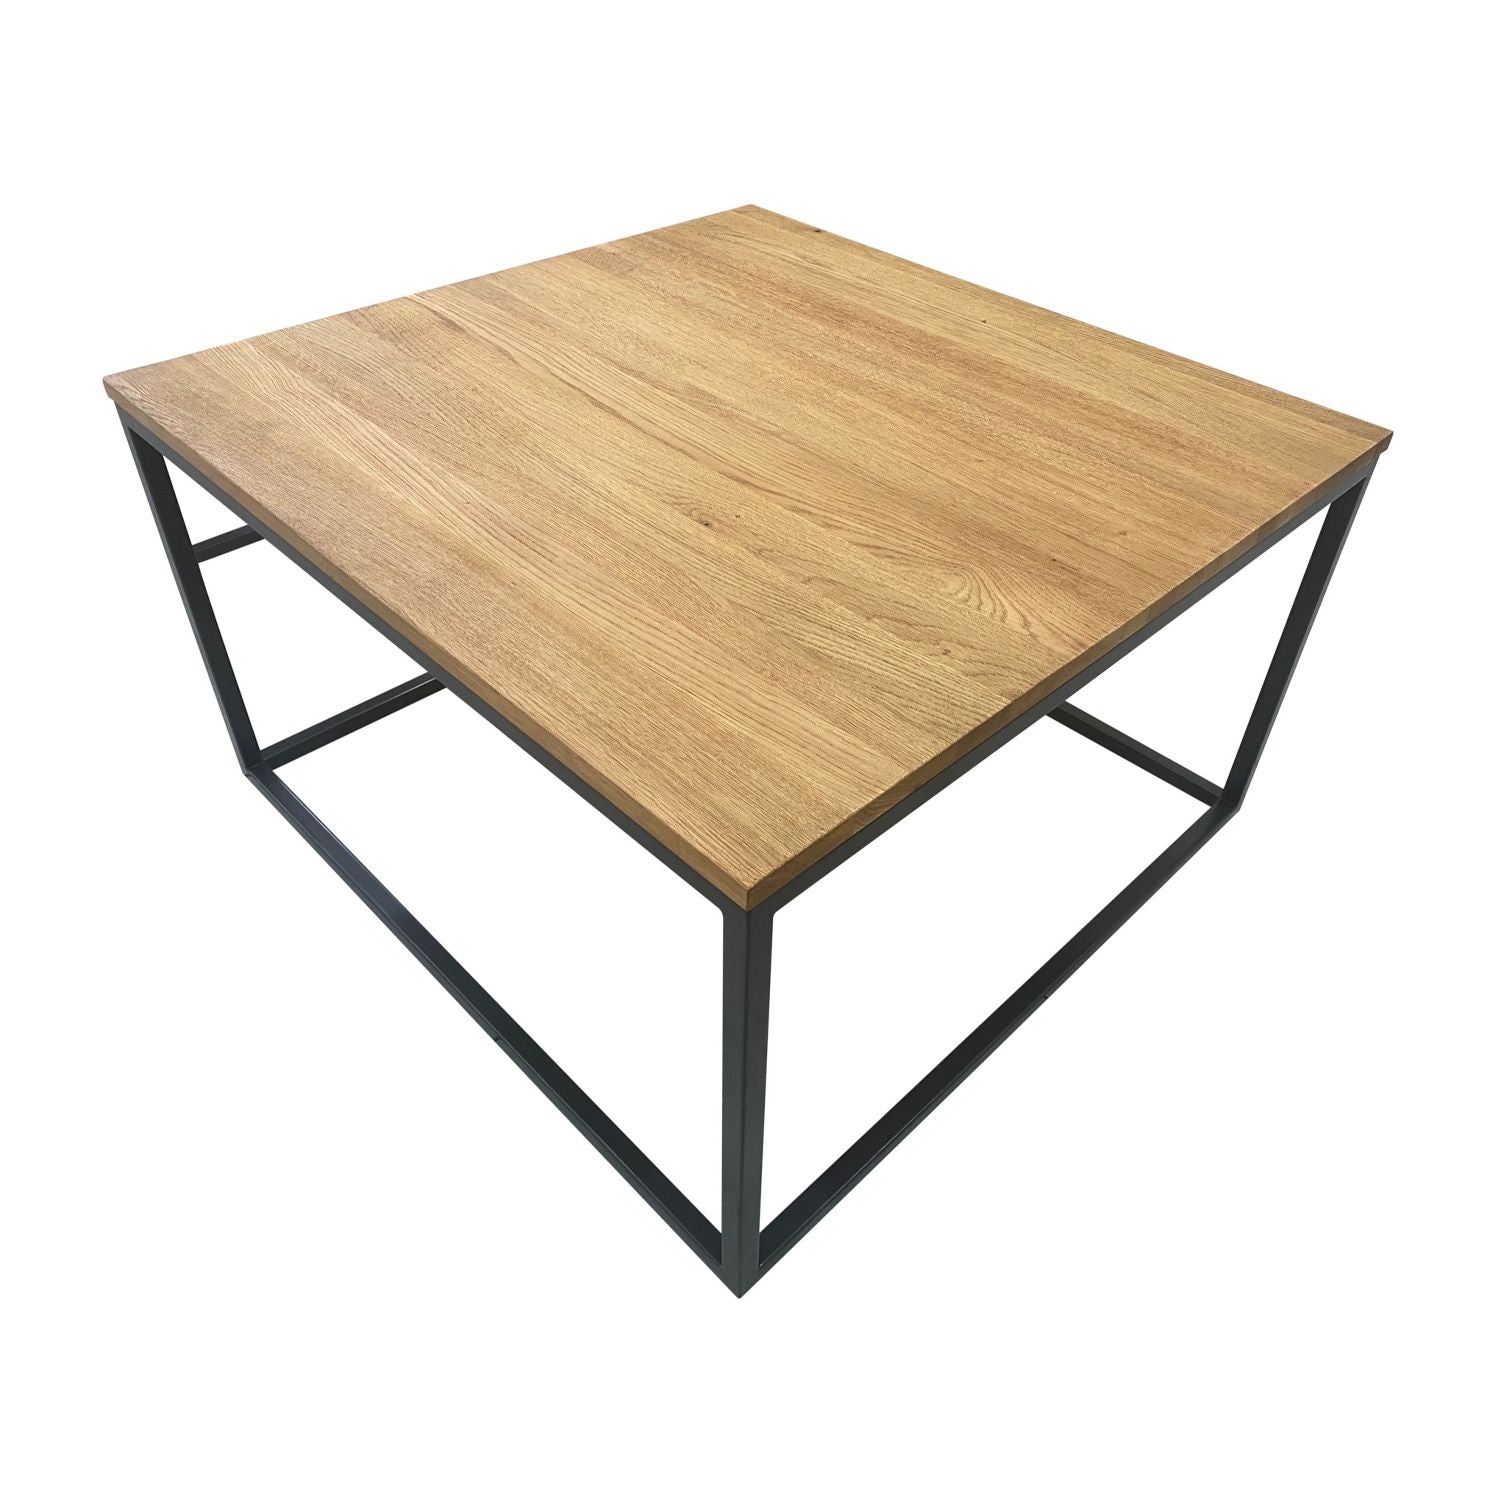 Elsworthy Oak Coffee Table - Square